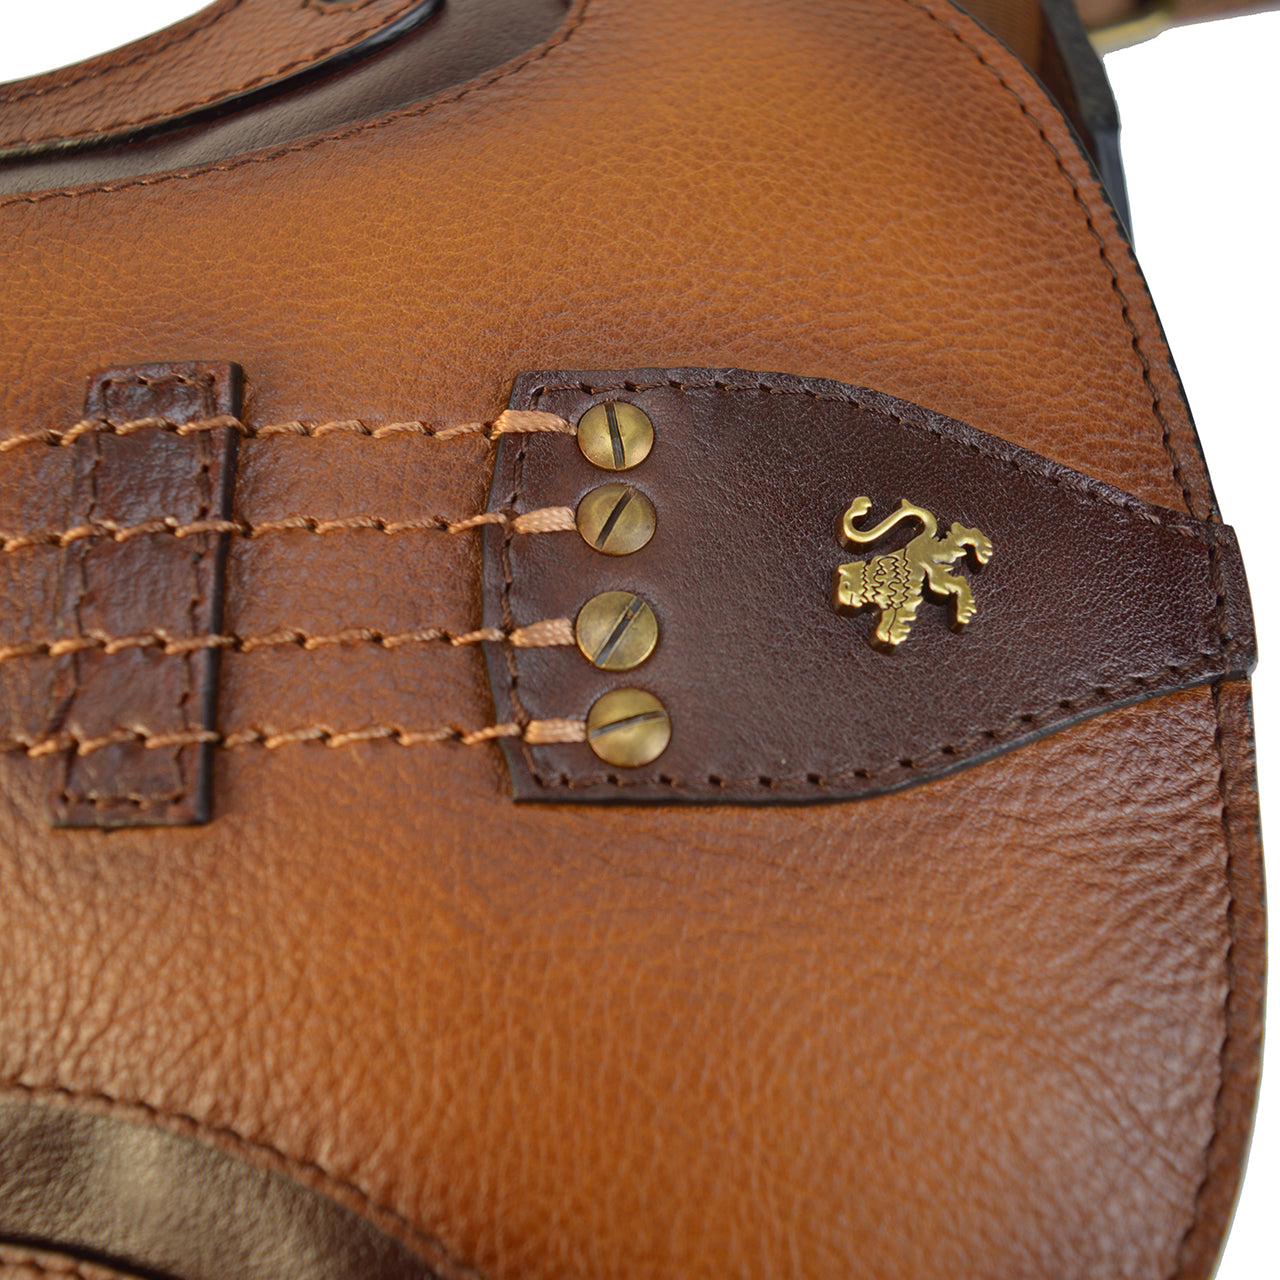 Pratesi Violino Backpack in genuine Italian leather B210 - Vegetable Tanned Italian Leather Brown